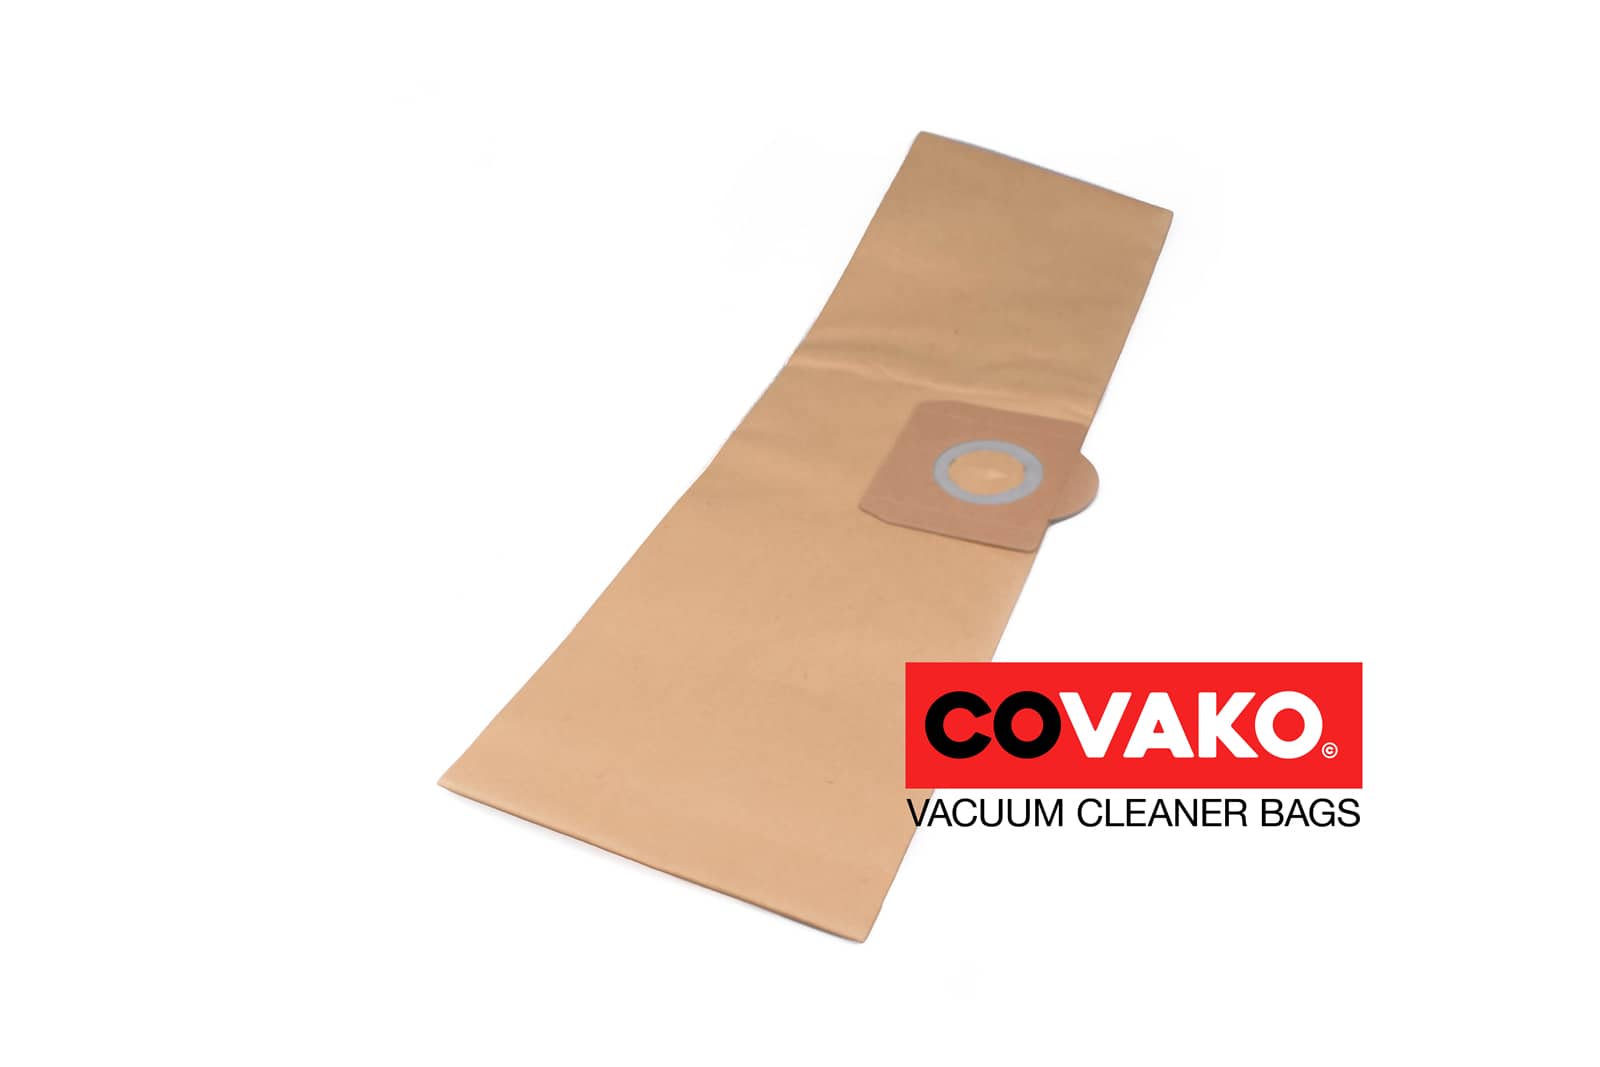 Omega Rio Serie / Paper - Omega vacuum cleaner bags